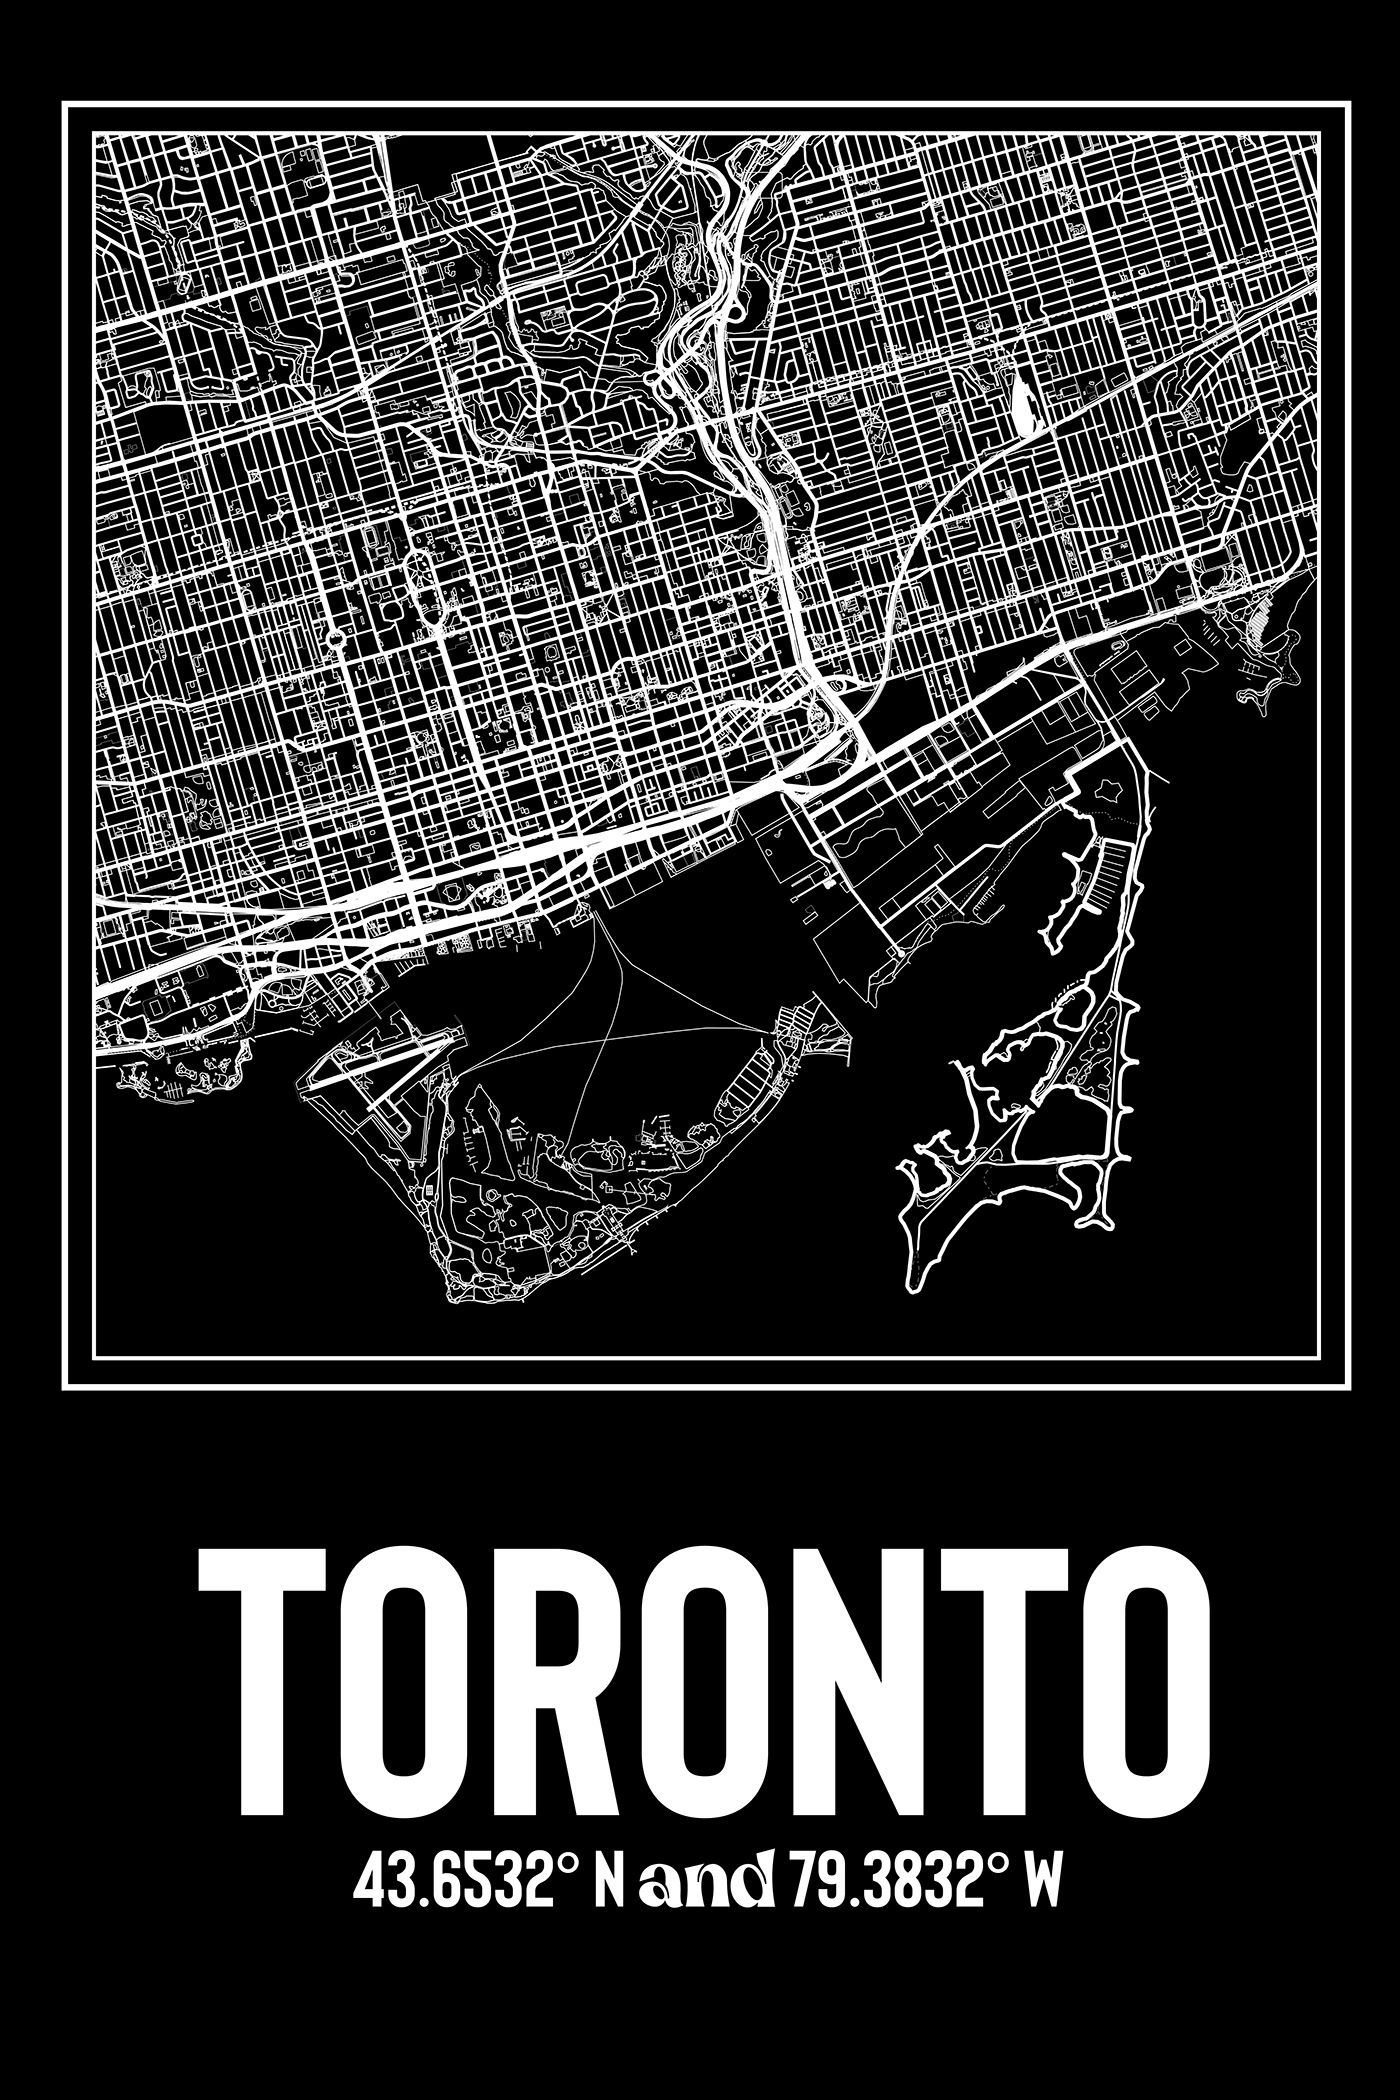 Canda designer graphic map Ontario Toronto